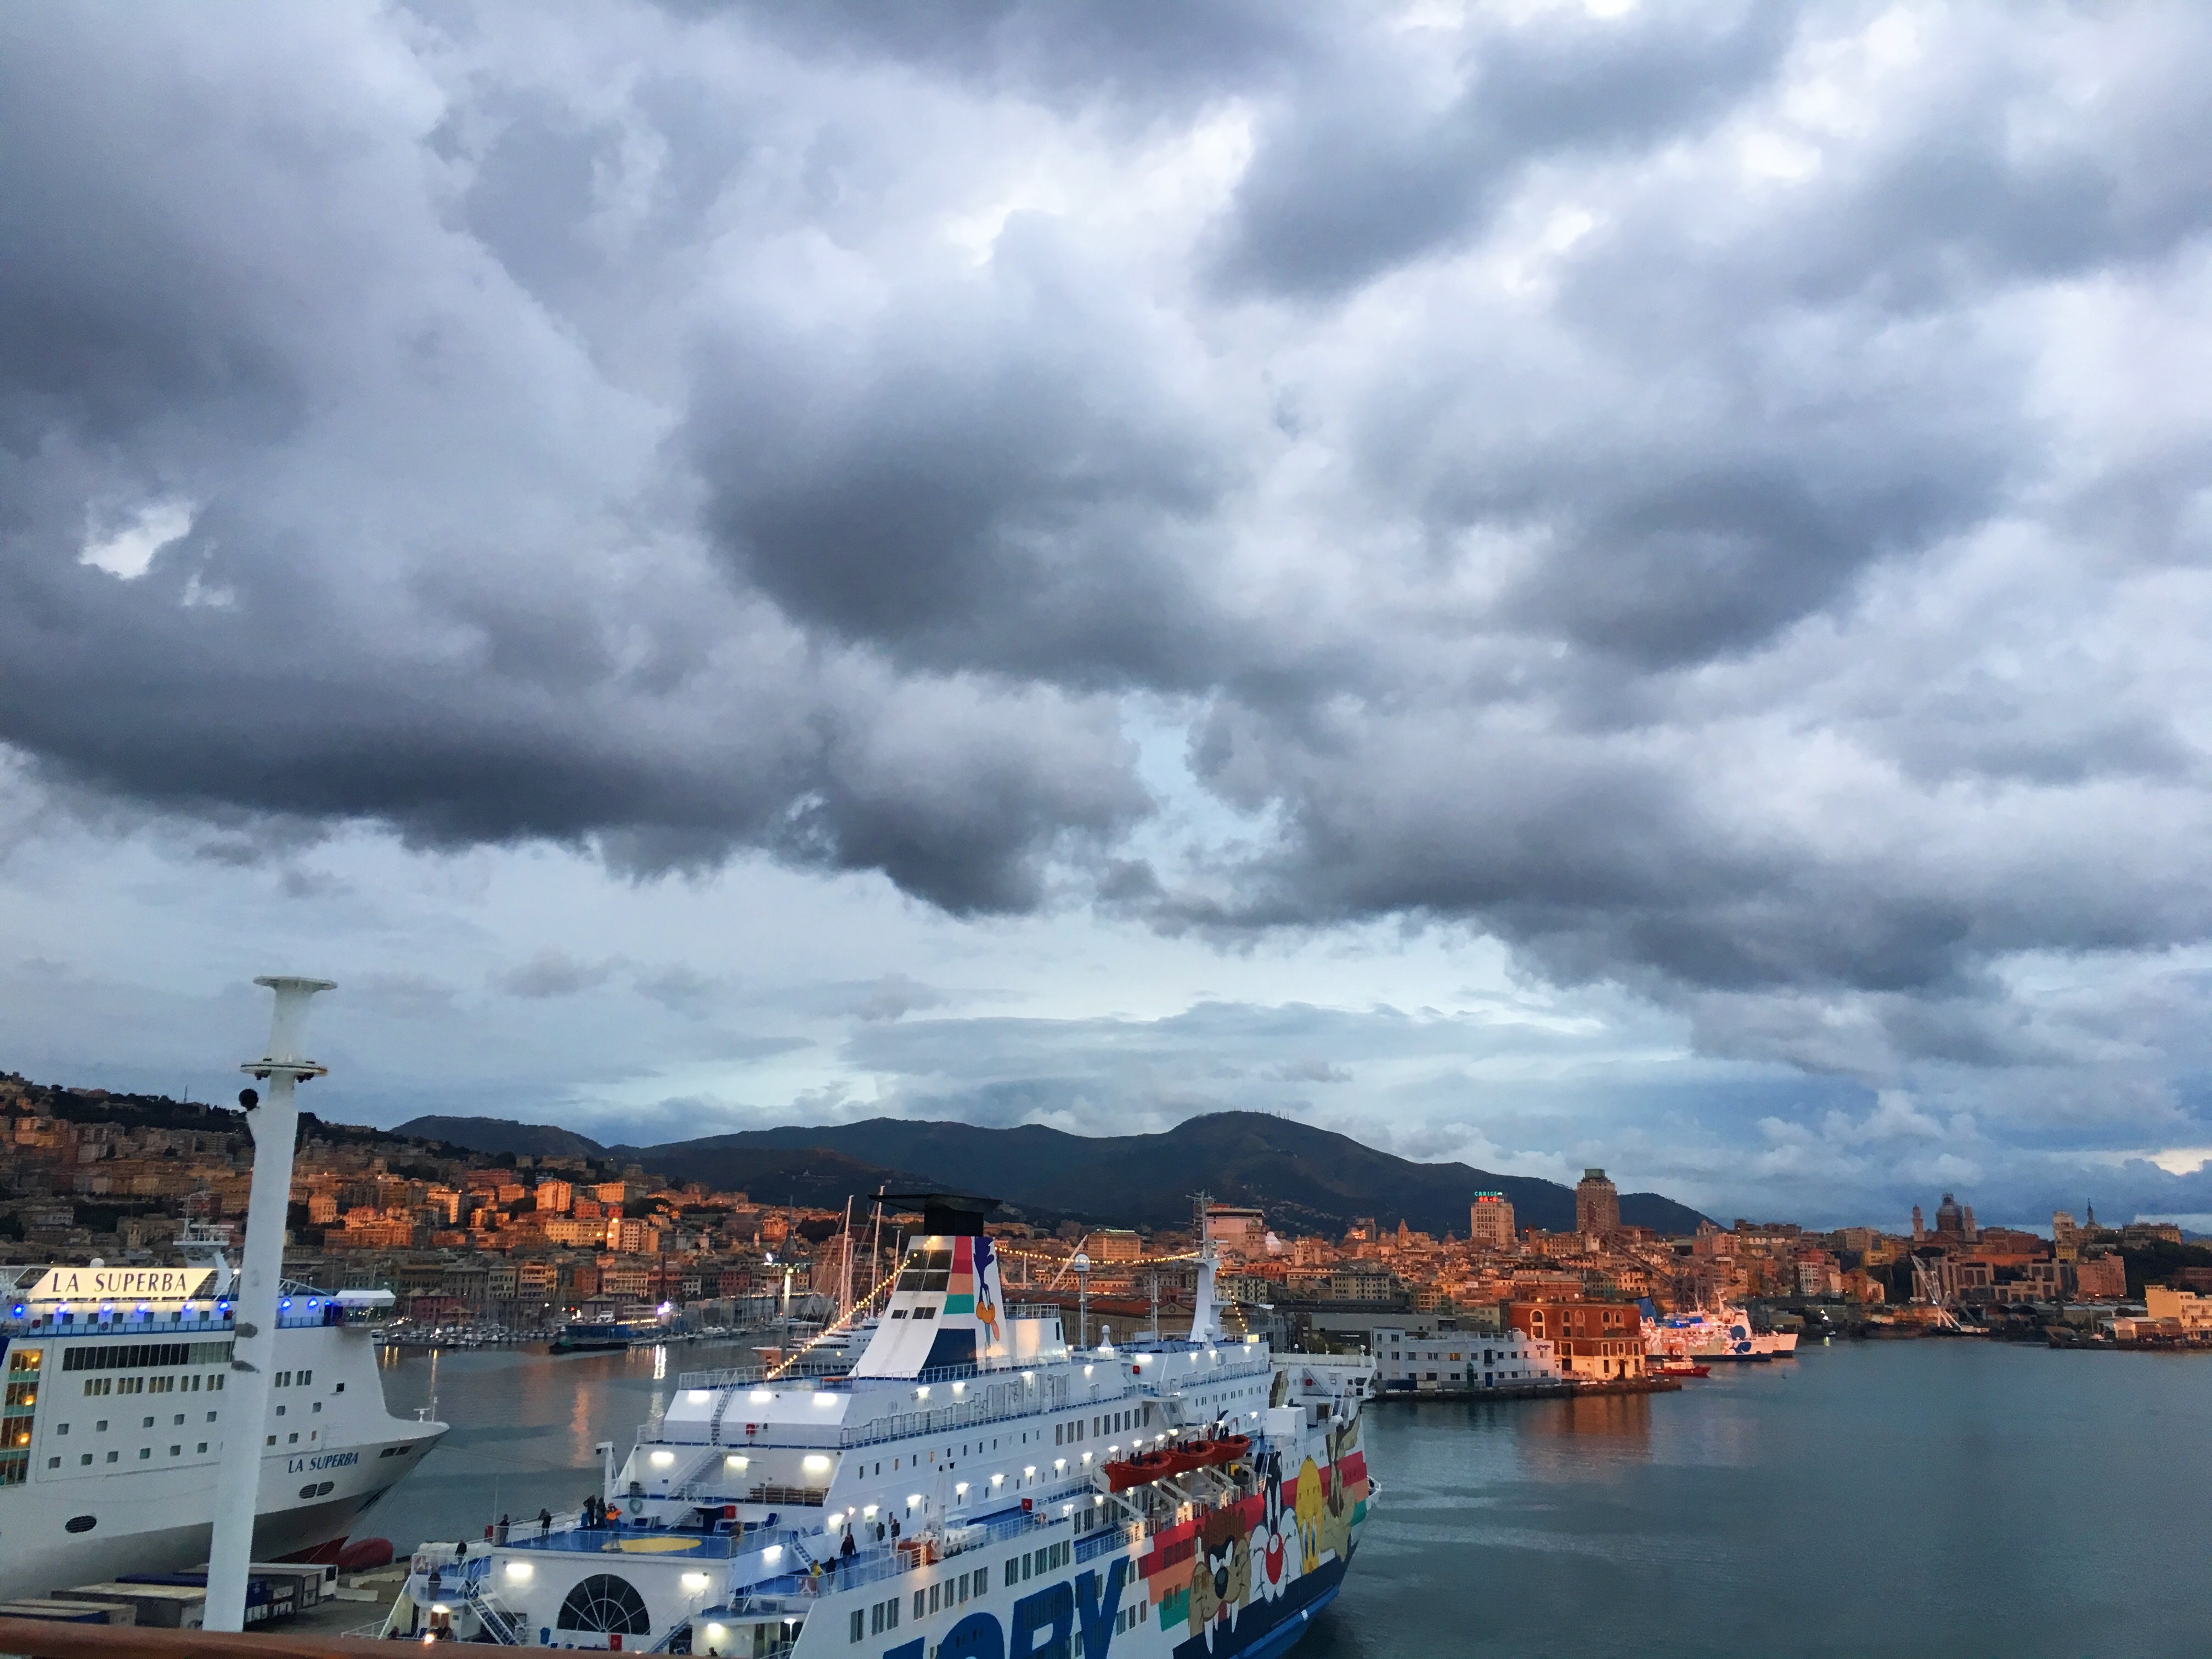 Boarding an overnight ferry from Genova to Sardinia, I say my farewell to a beautiful city and explore the Rhapsody, a ship of Grandi Navi Veloci company.